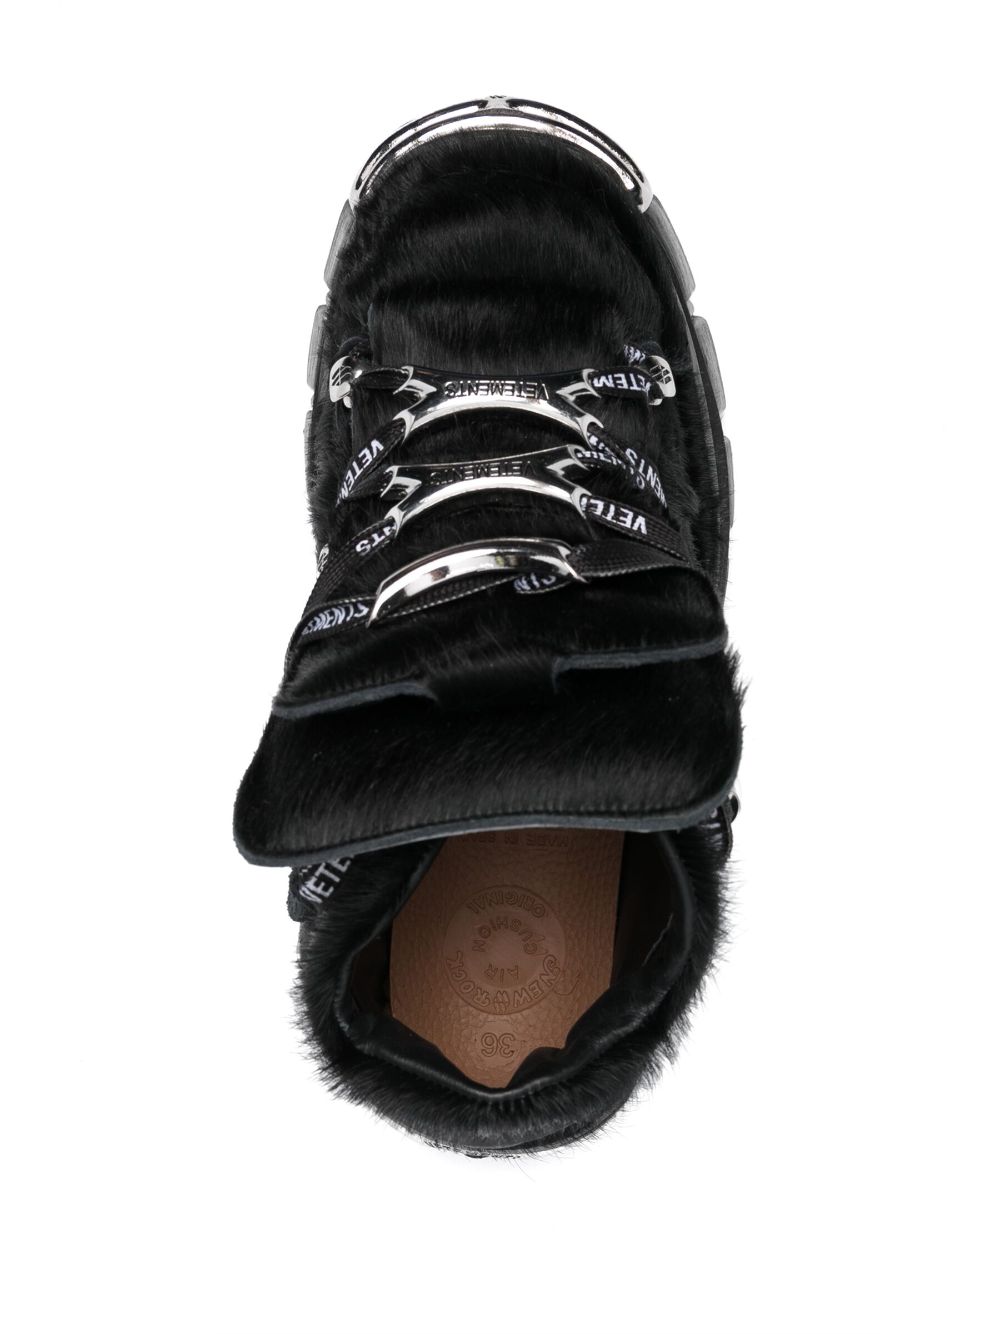 Vetements X New Rock VETEMENTS X NEW ROCK- Leather Platform Sneakers